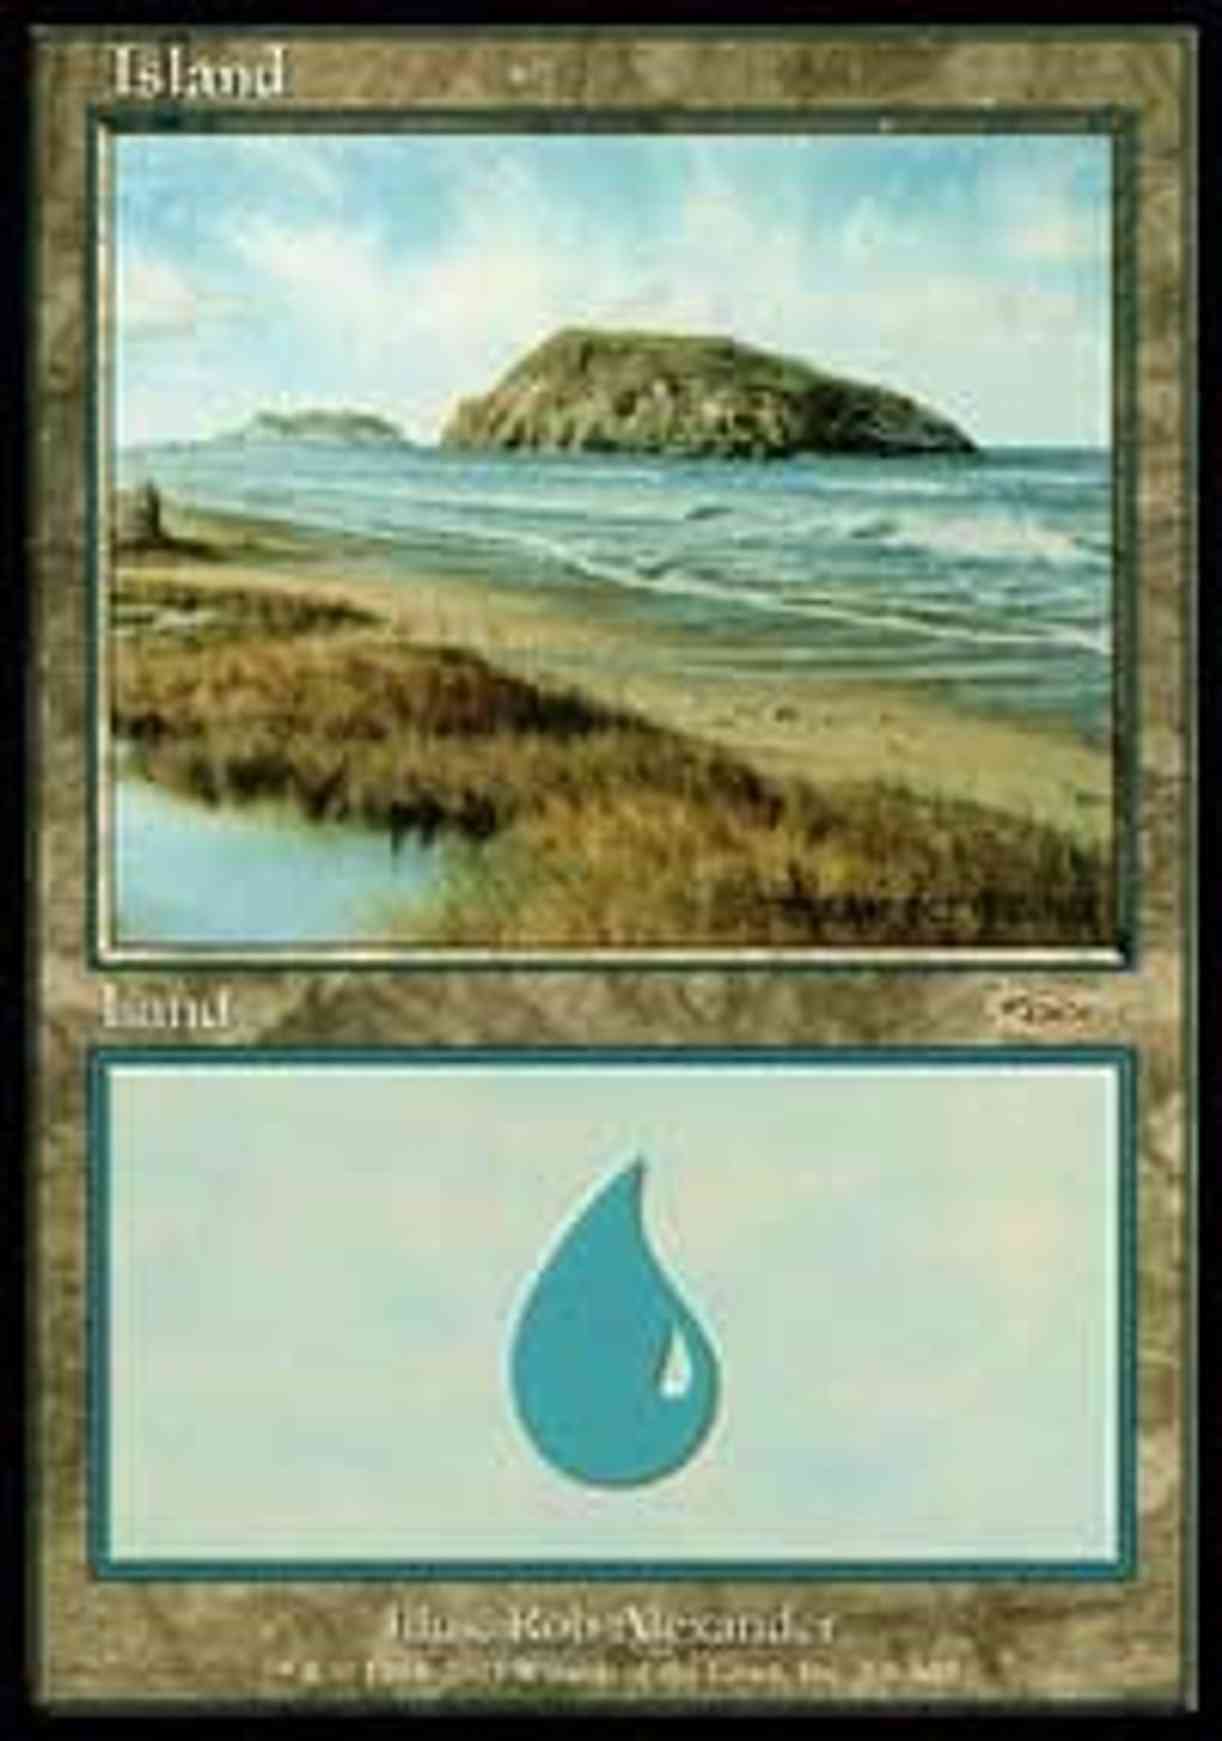 Island (2003) magic card front